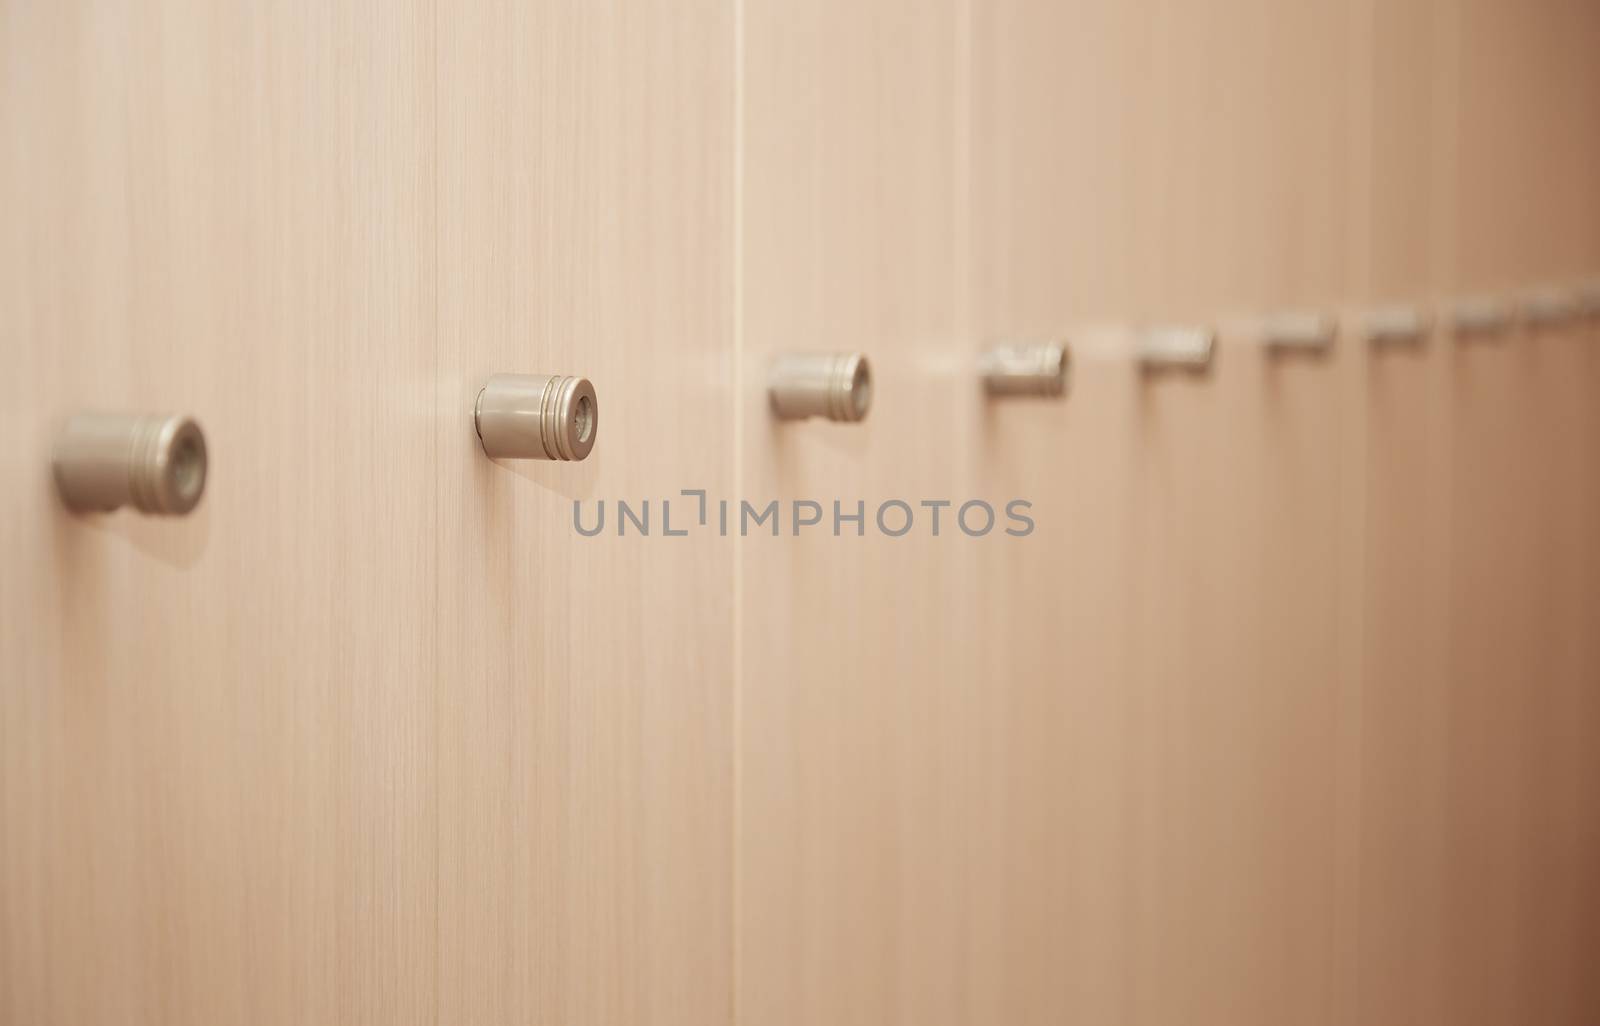 Doors of cabinet. Close-up horizontal photo